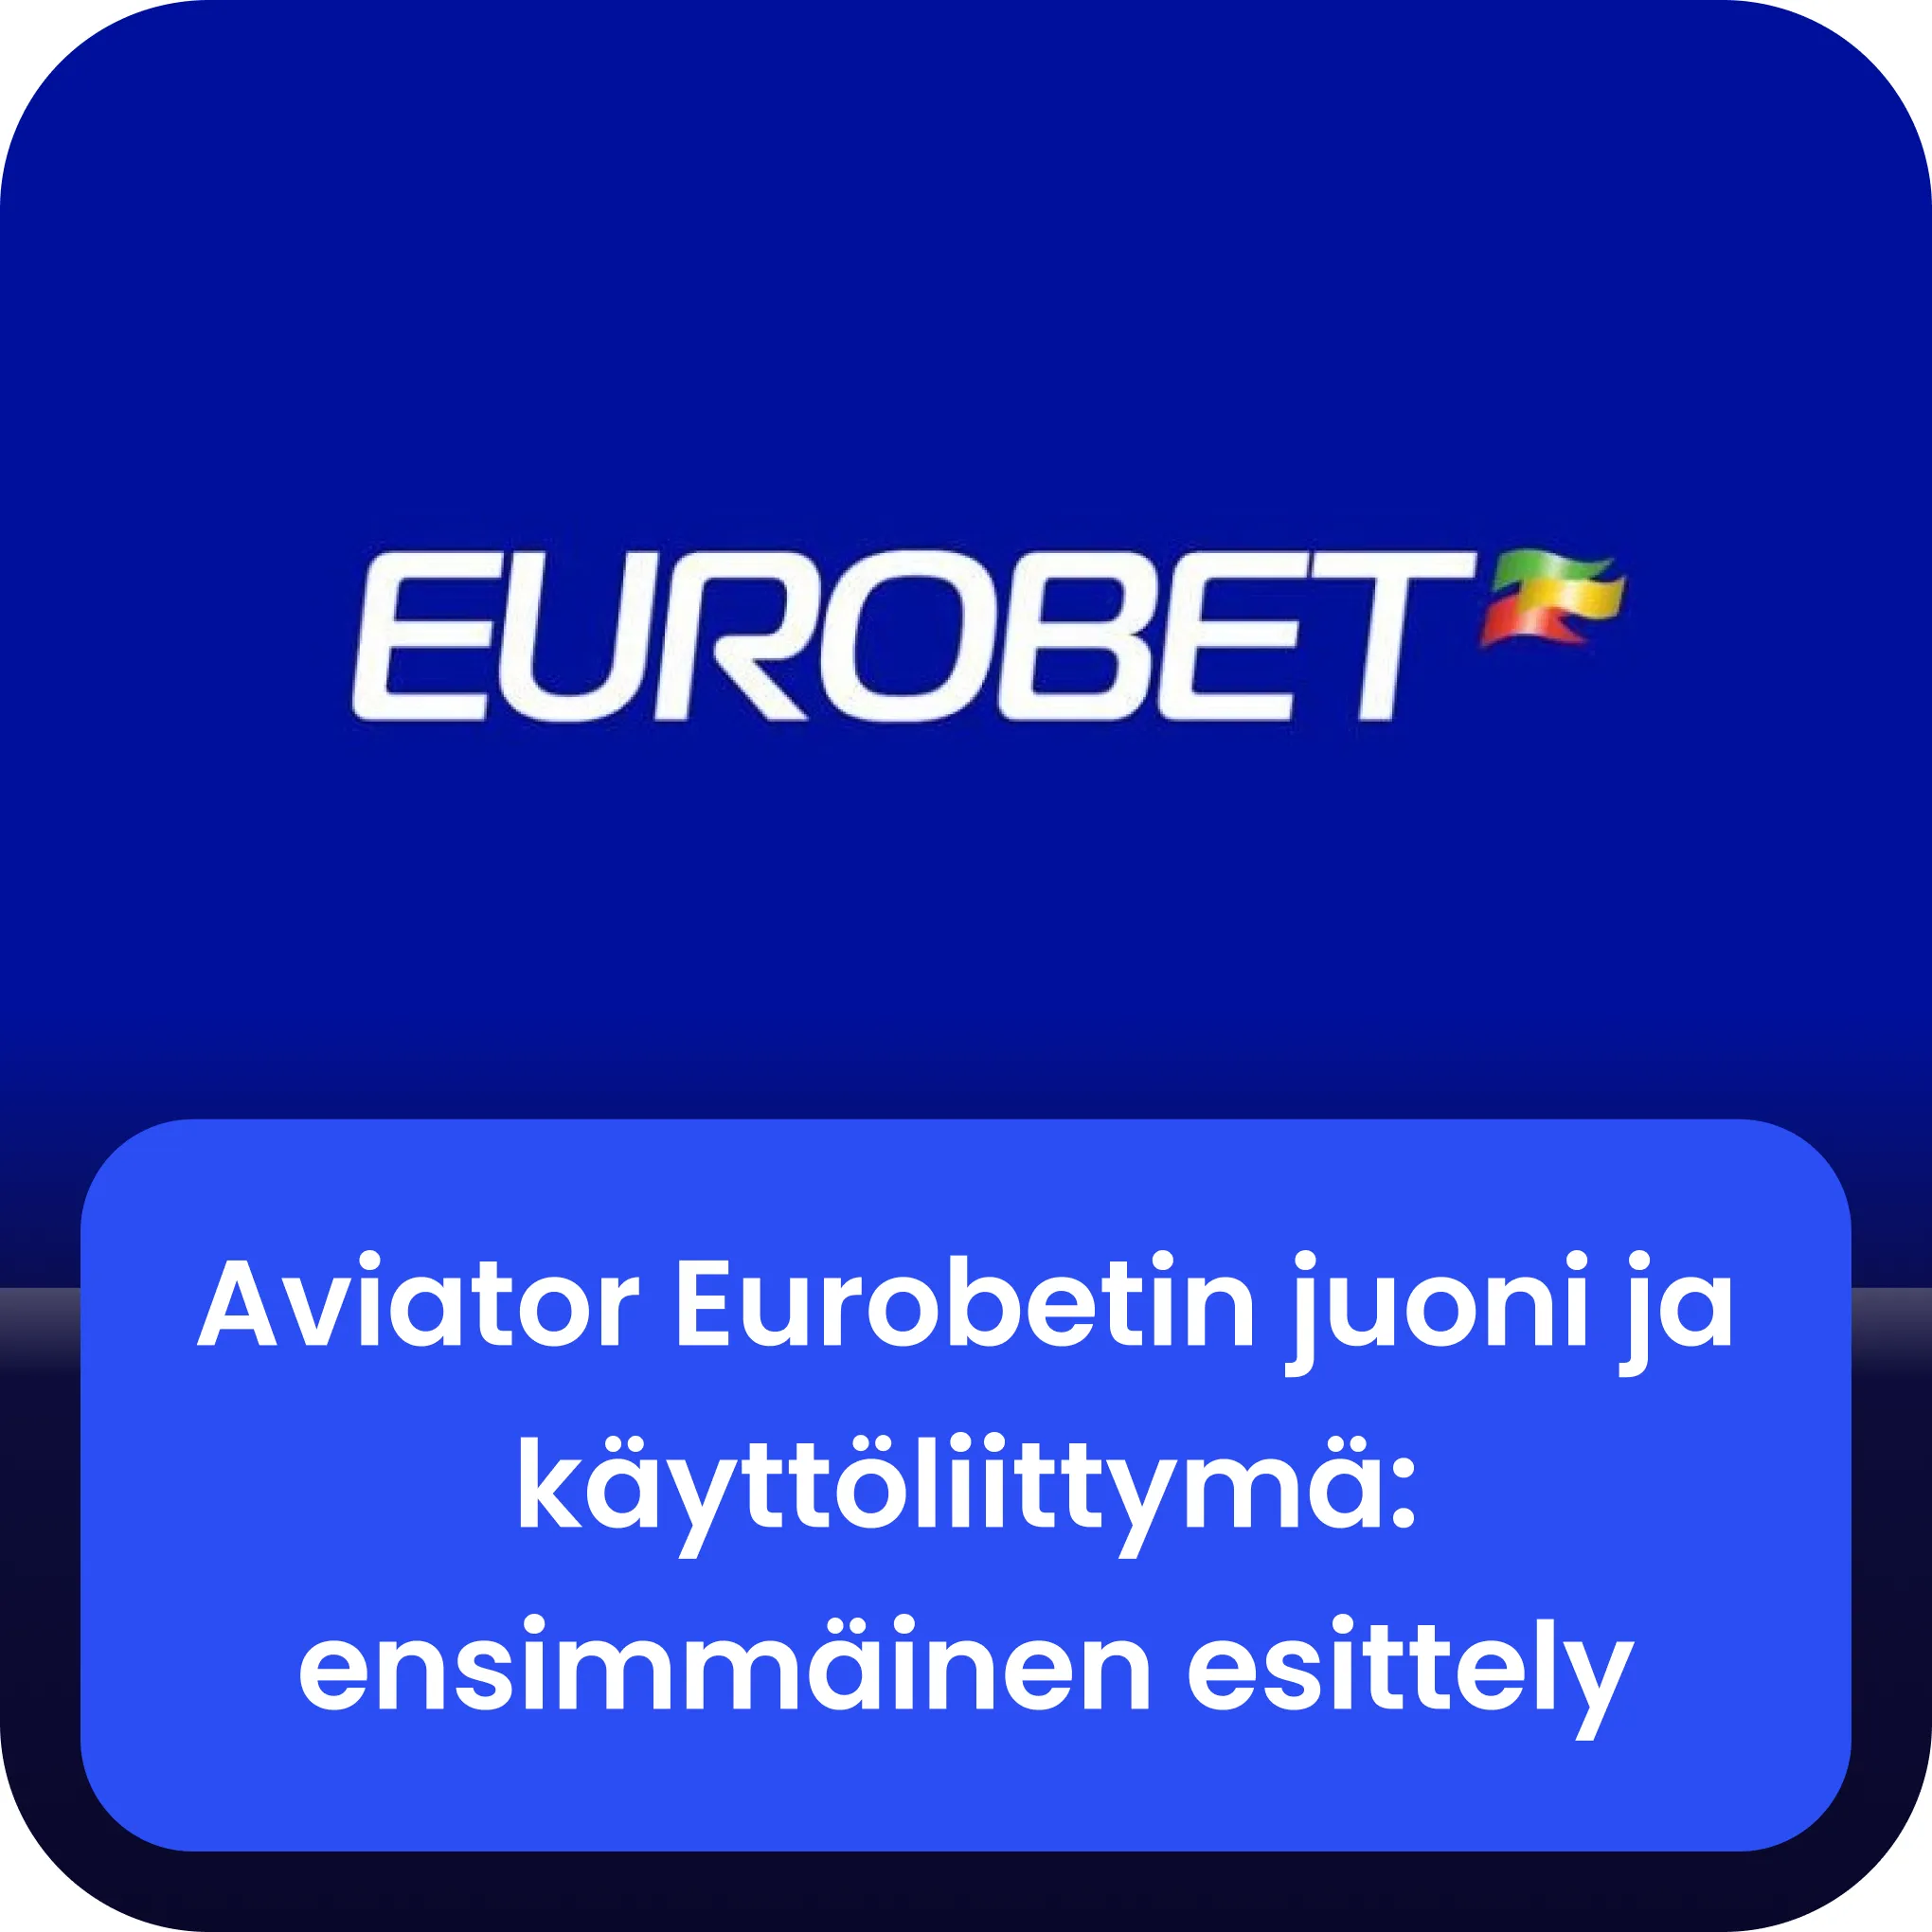 eurobet aviator tarina